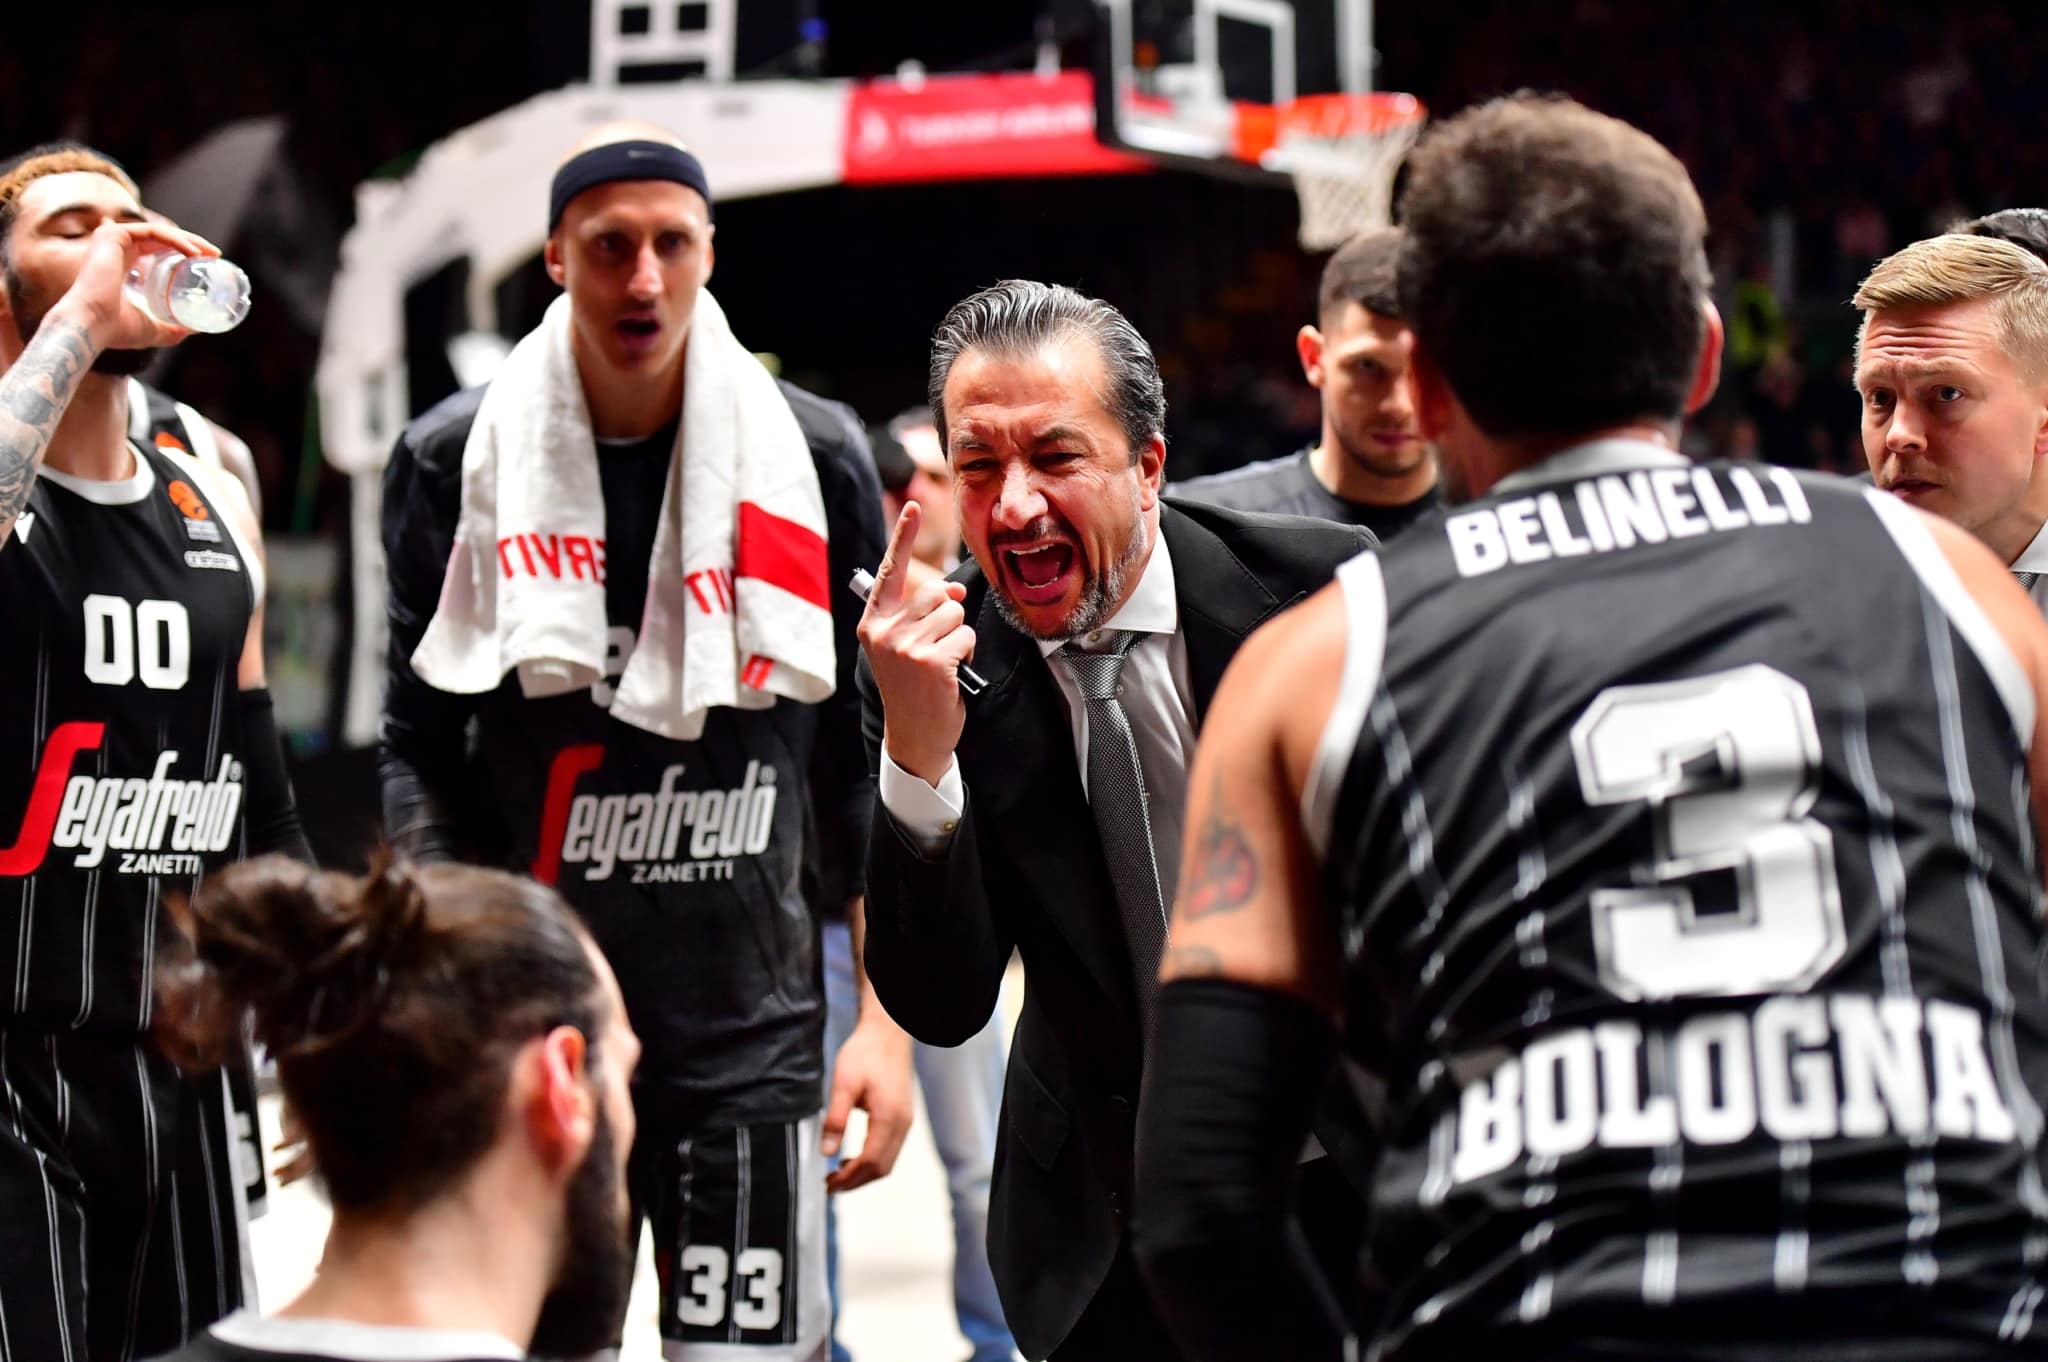 Virtus Bologna is the Basketball Champions League winner of 2019 - Eurohoops